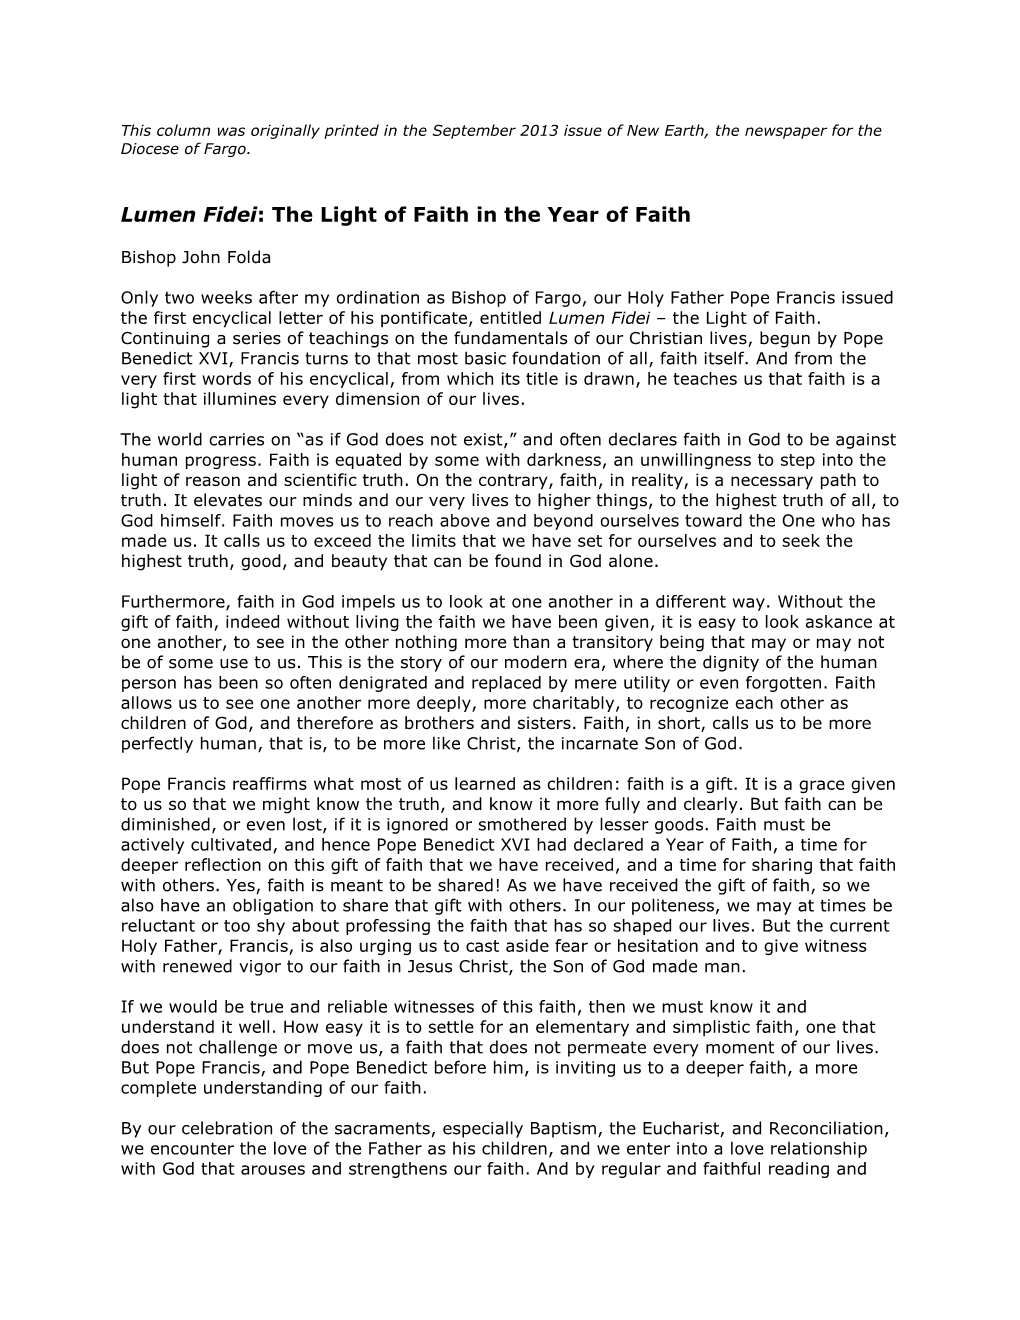 Lumen Fidei: the Light of Faith in the Year of Faith